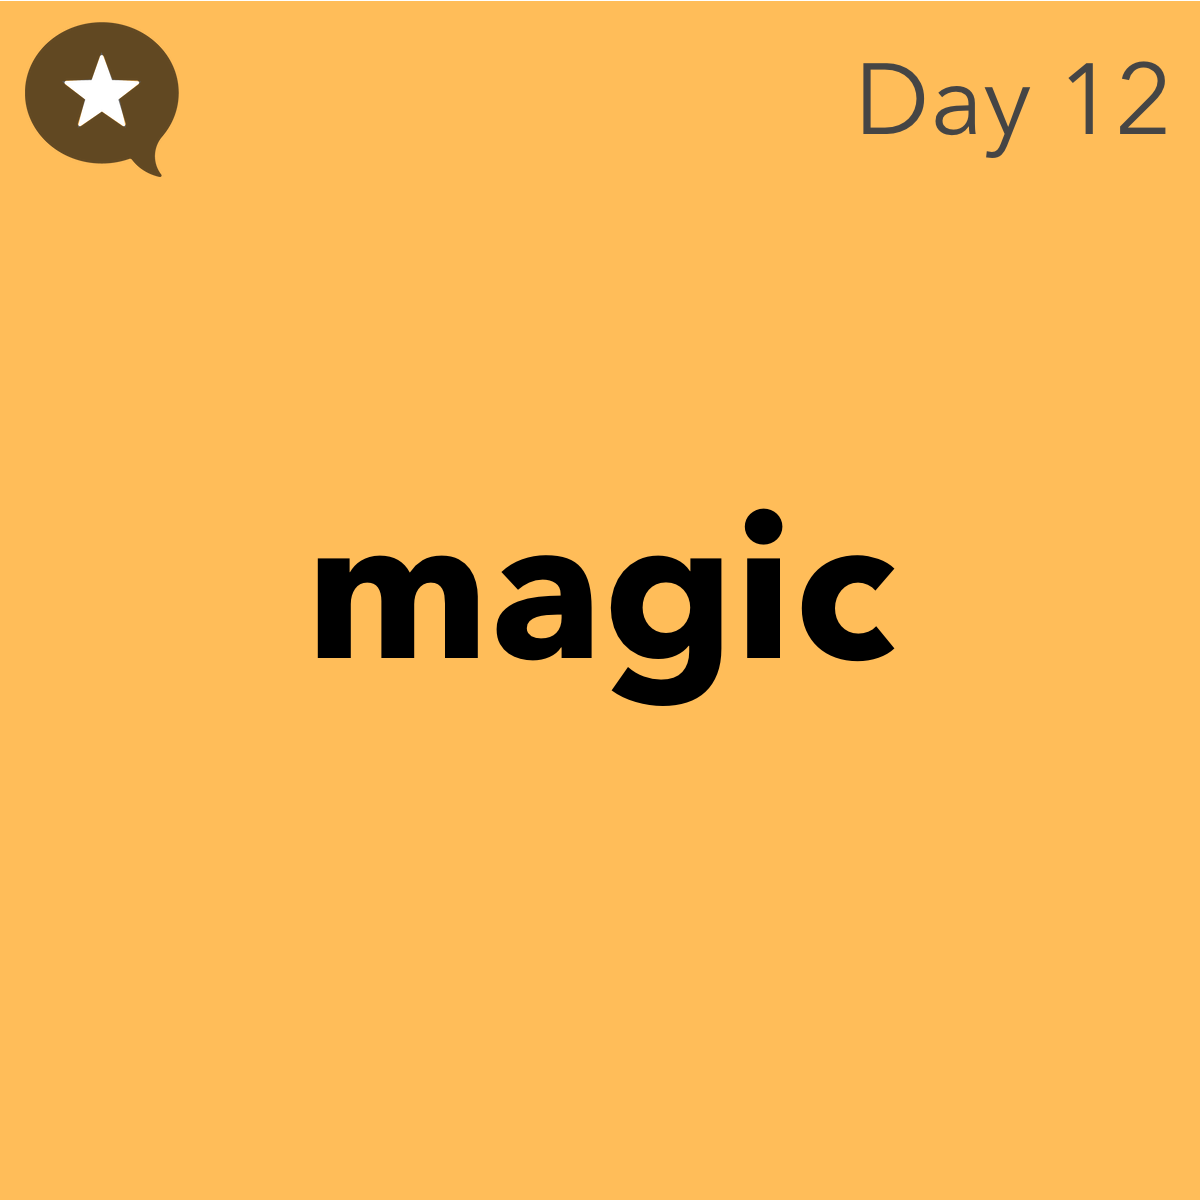 Day 12 magic graphic